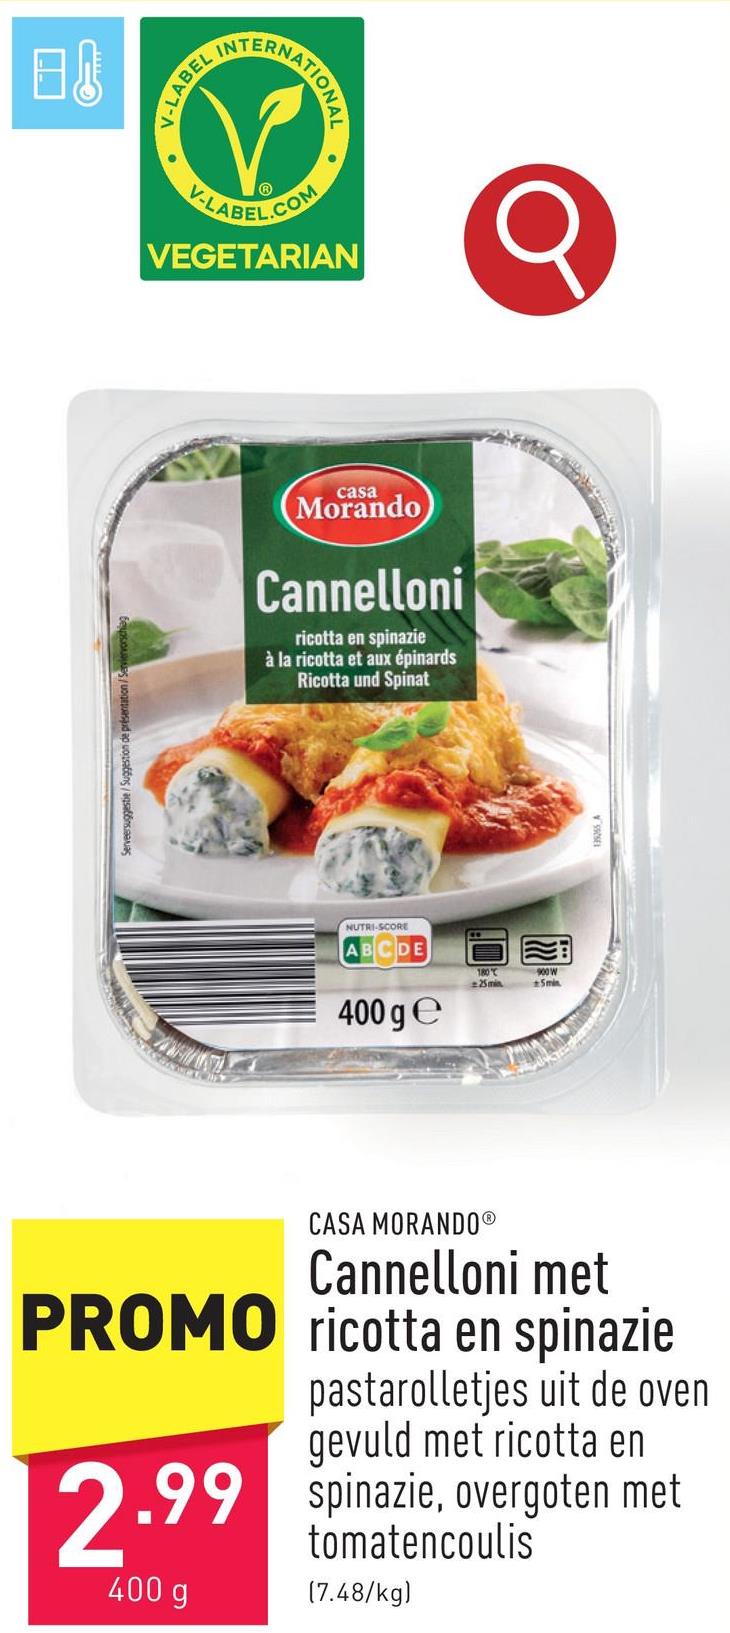 Cannelloni met ricotta en spinazie pastarolletjes uit de oven gevuld met ricotta en spinazie, overgoten met tomatencoulis